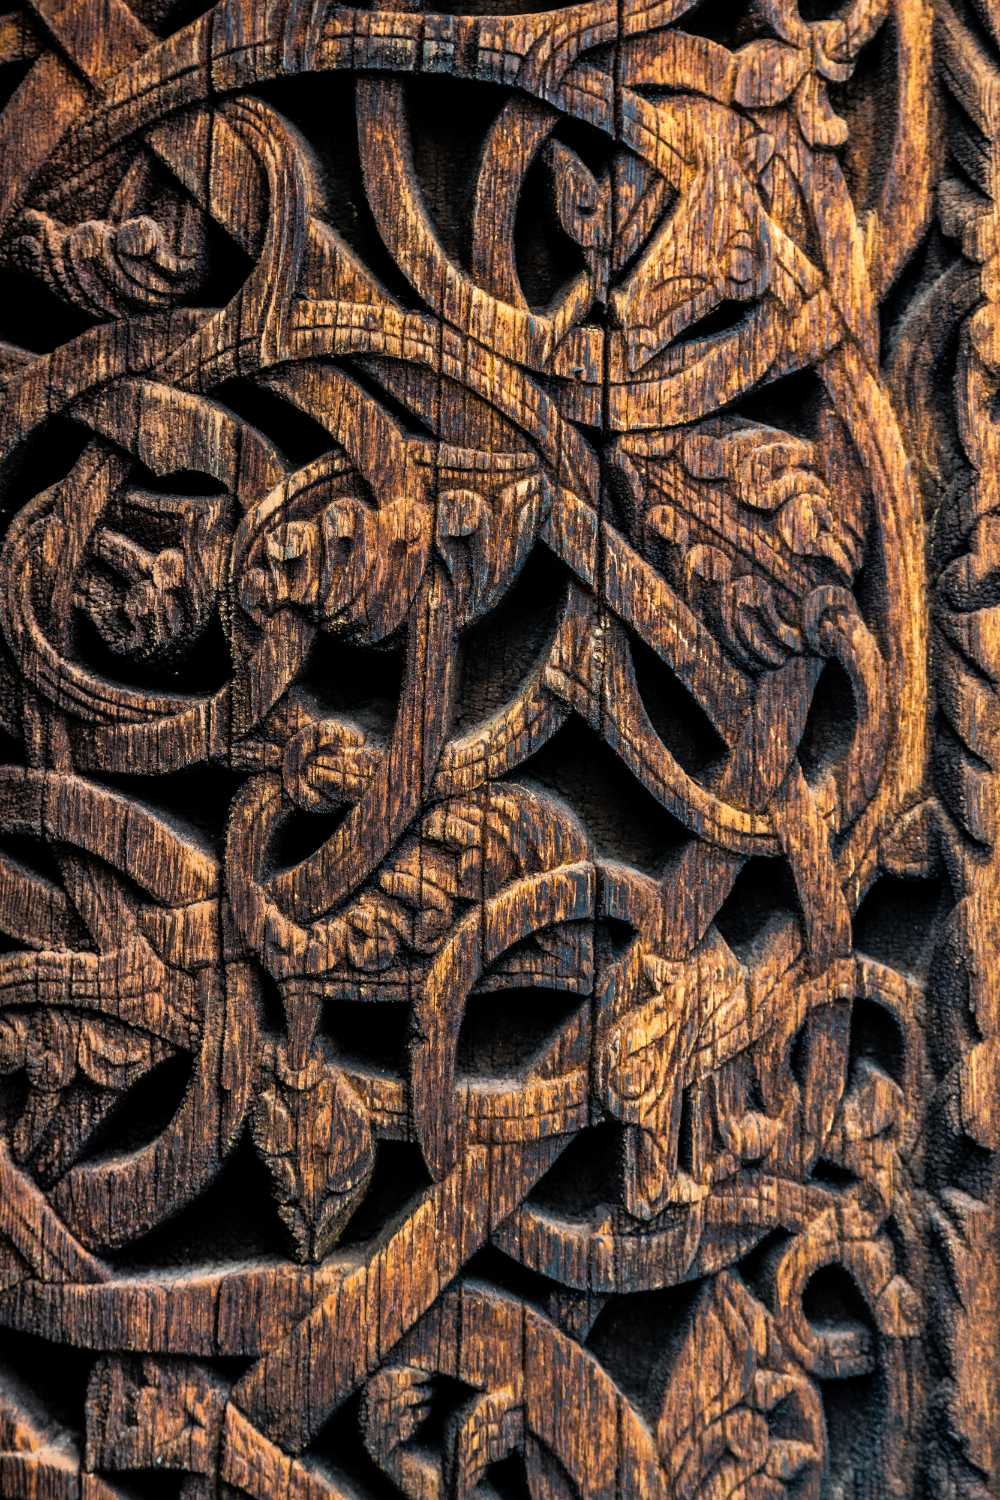 Viking carving into wood